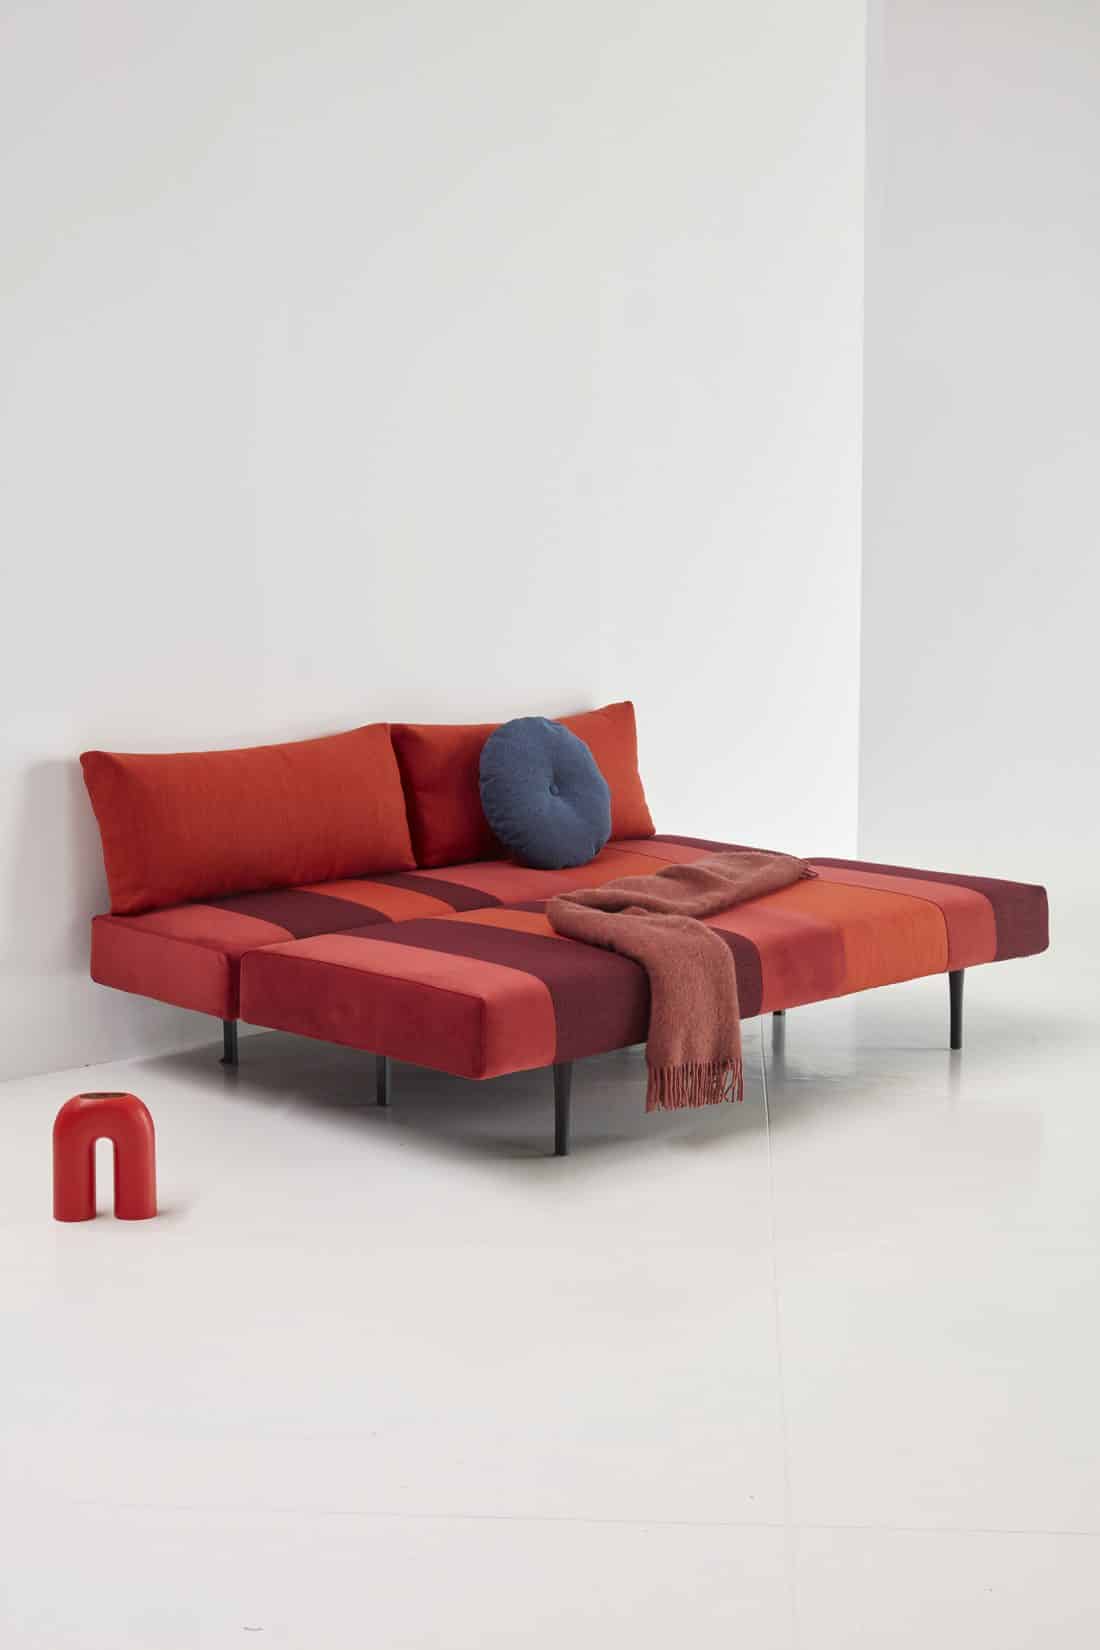 Conlix Patchwork Red Sofa Bed E6 Web